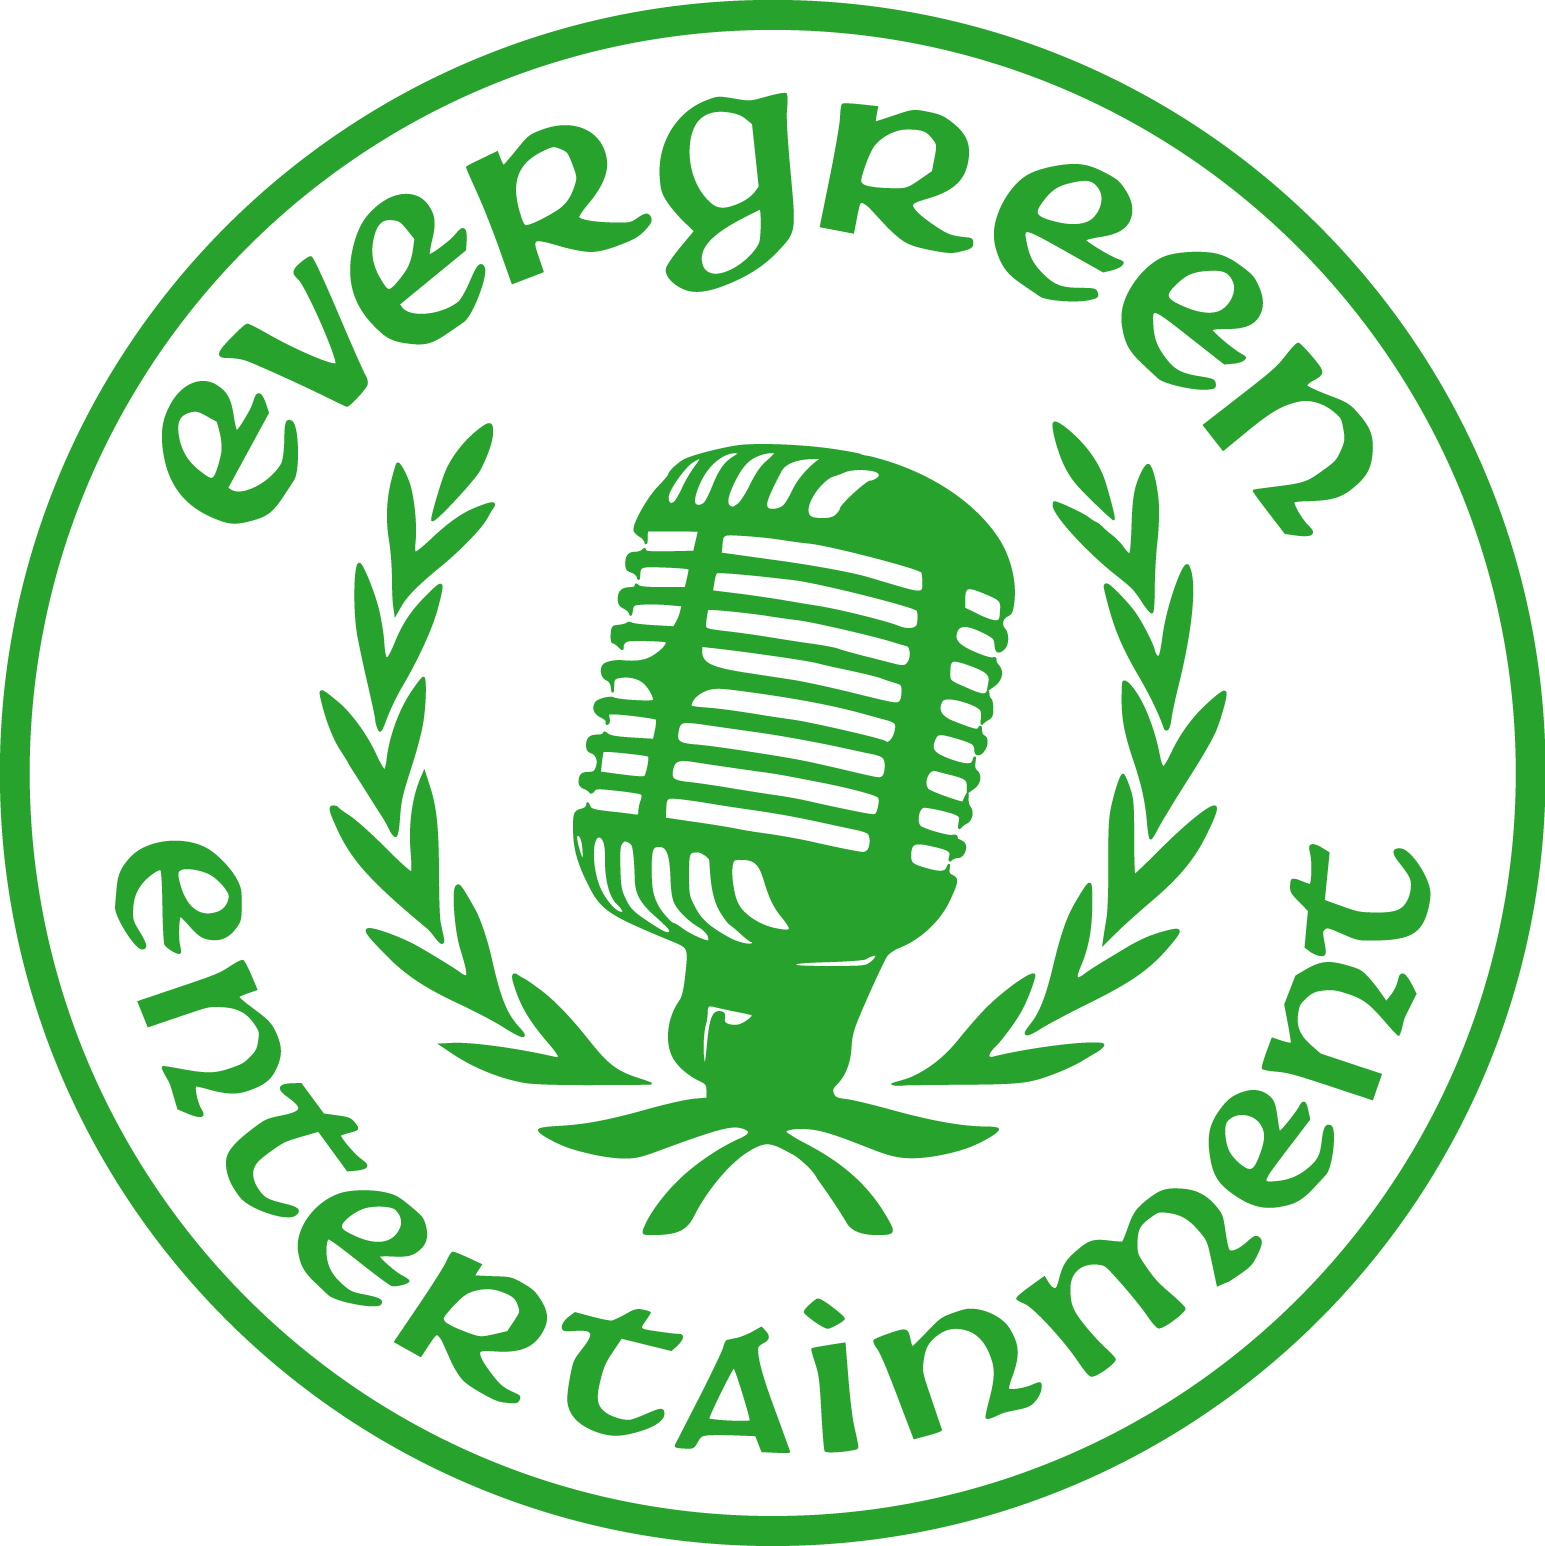 Evergreen Entertainment